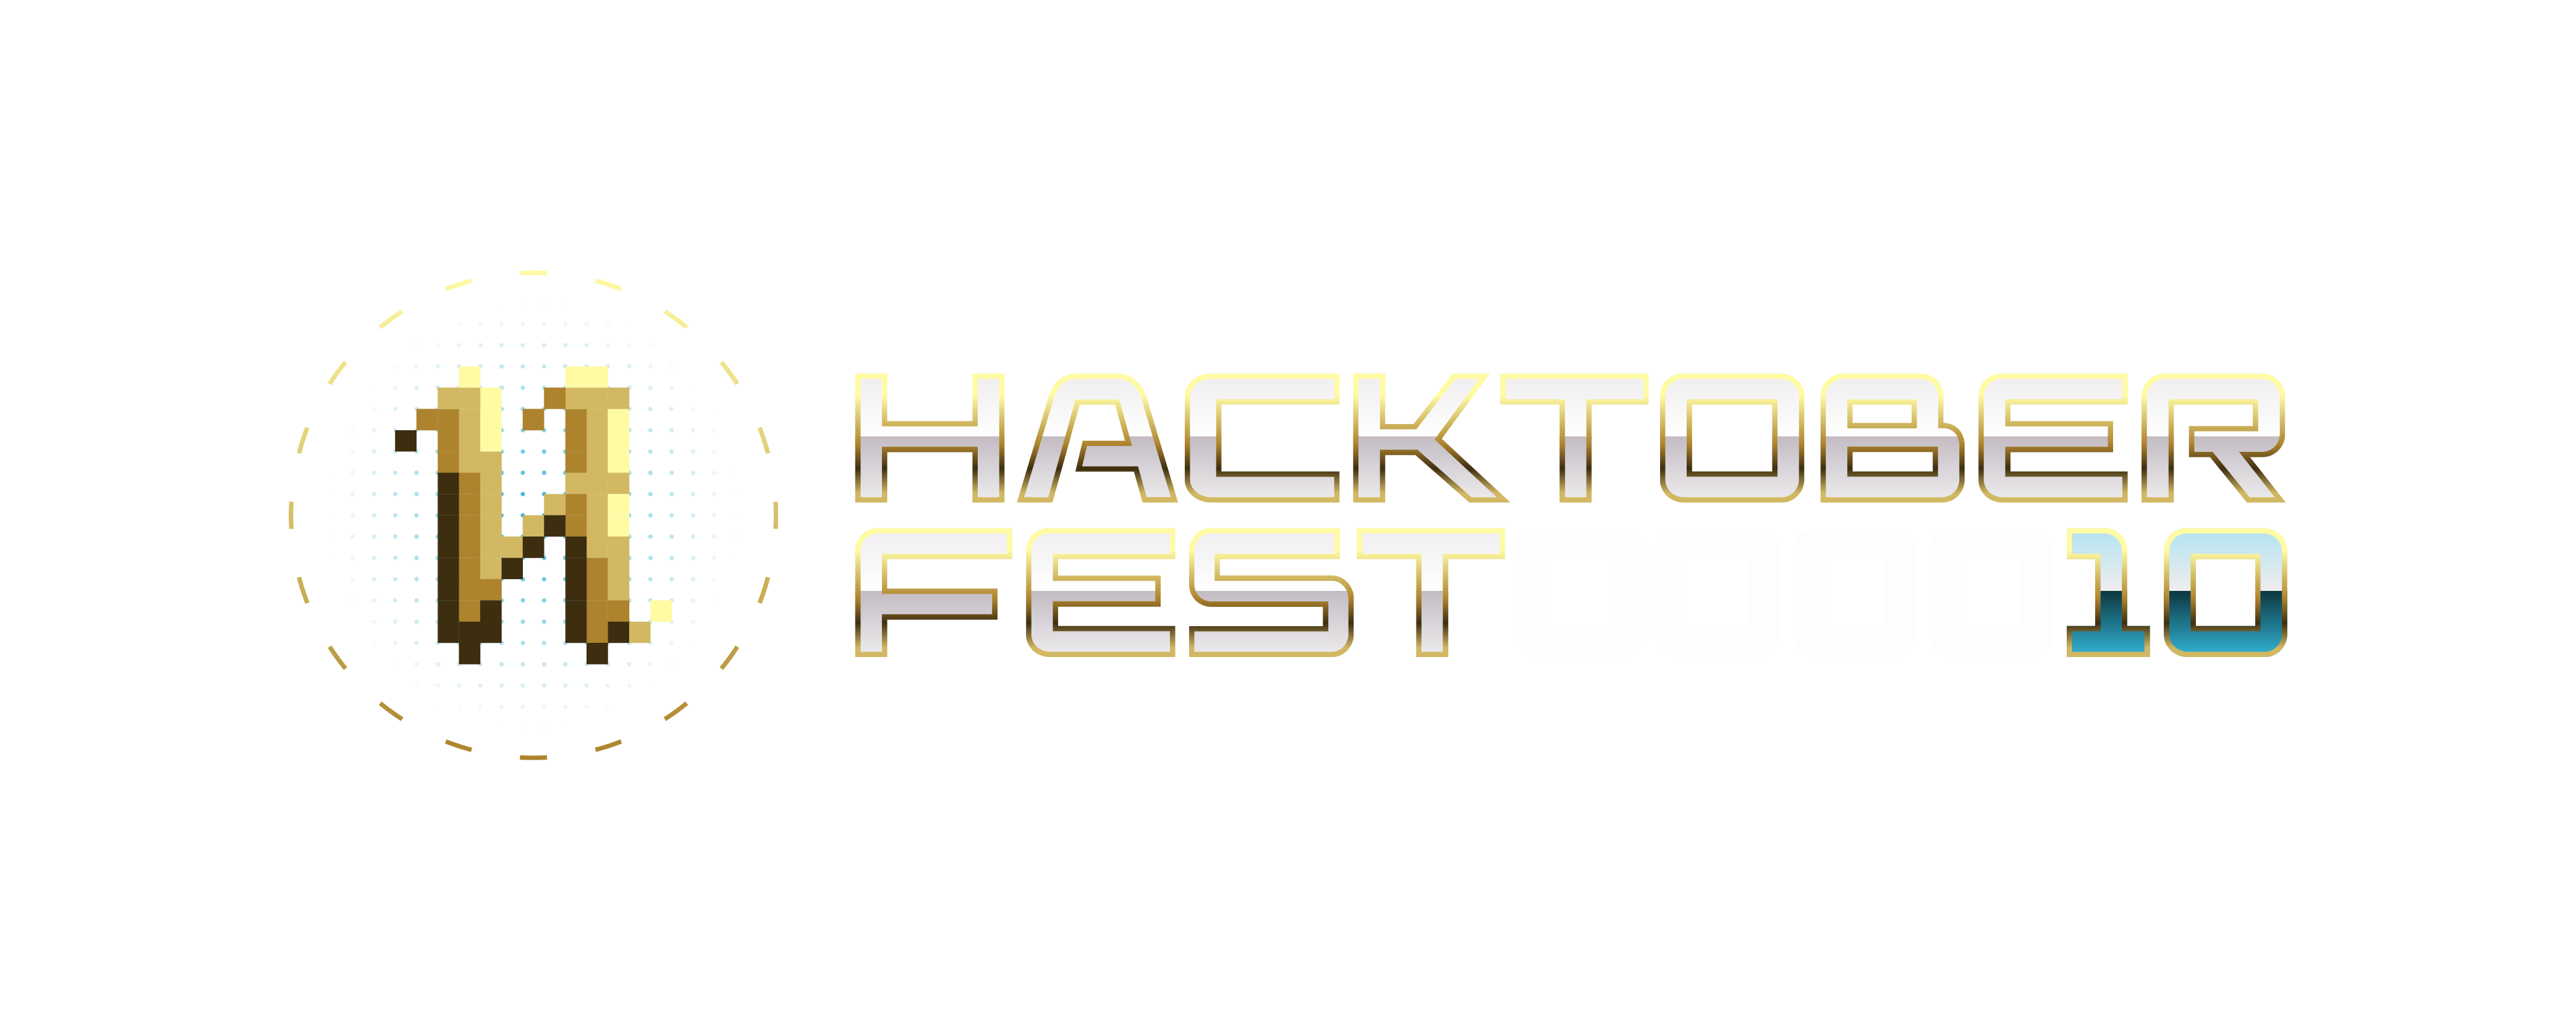 Hacktoberfest Logo